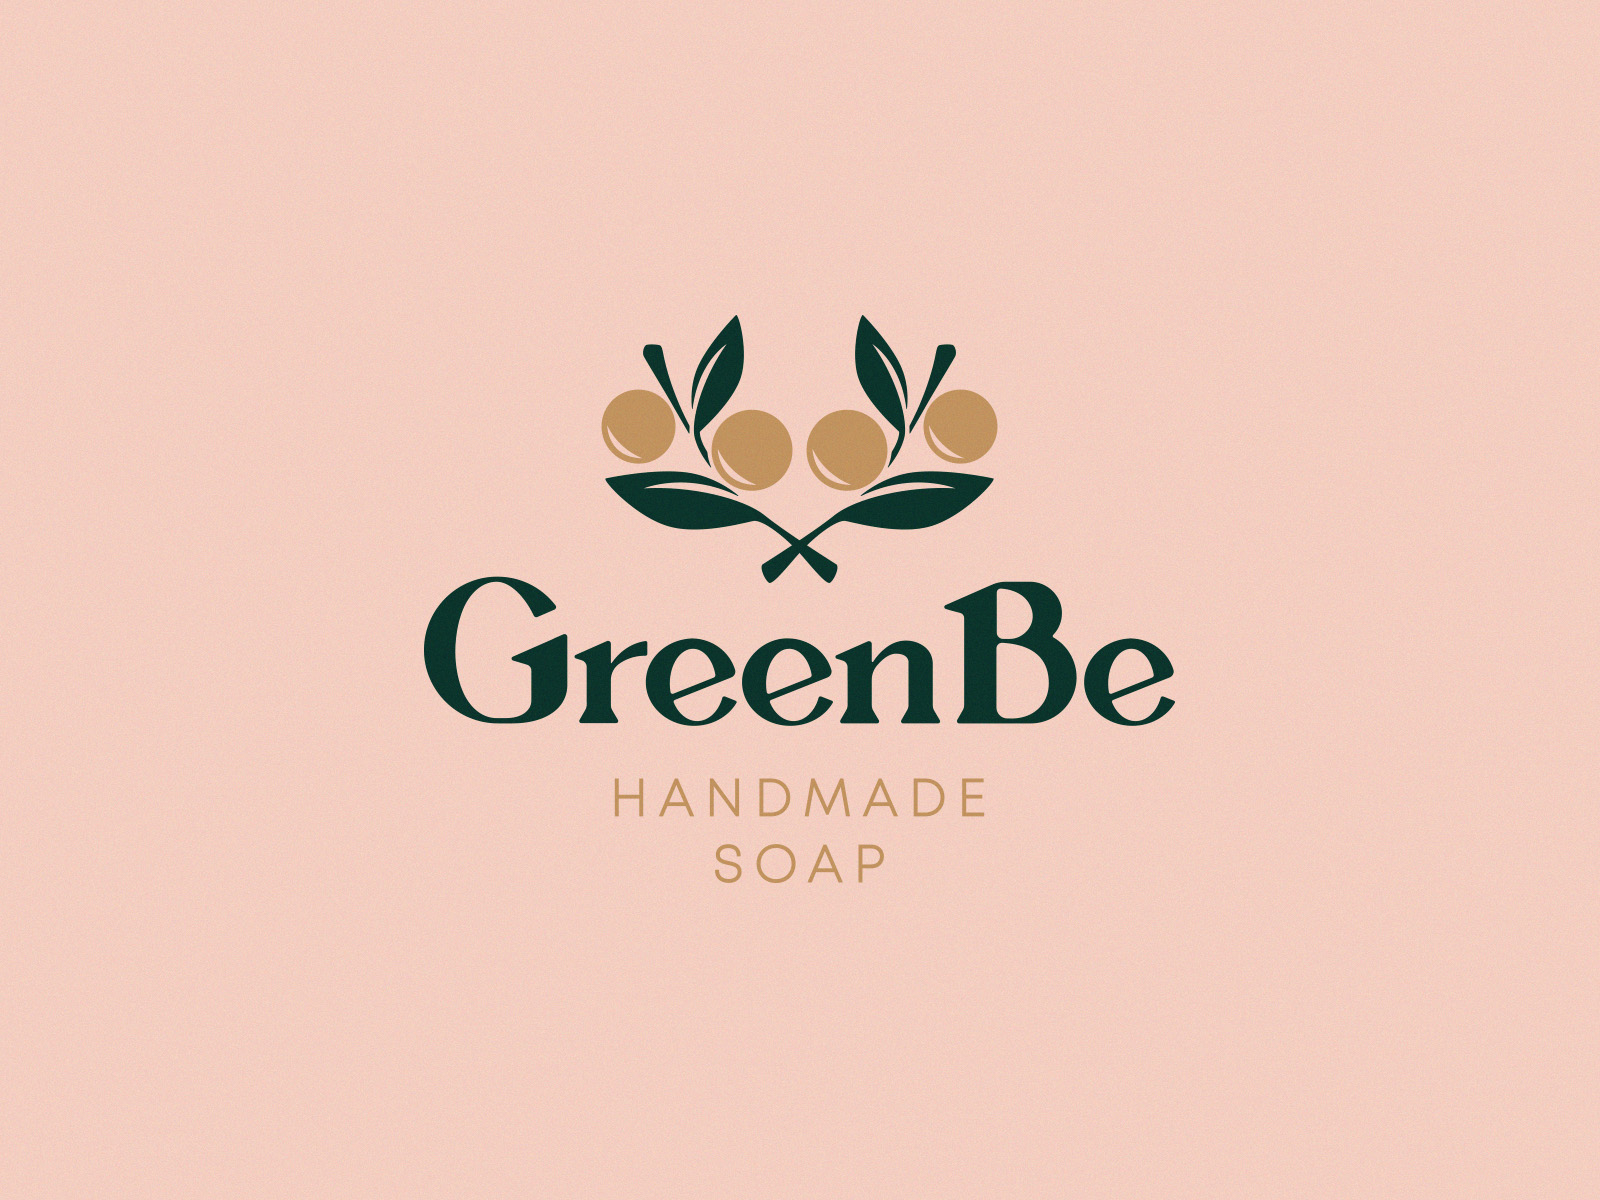 GreenBe by Eduardo Delgado on Dribbble